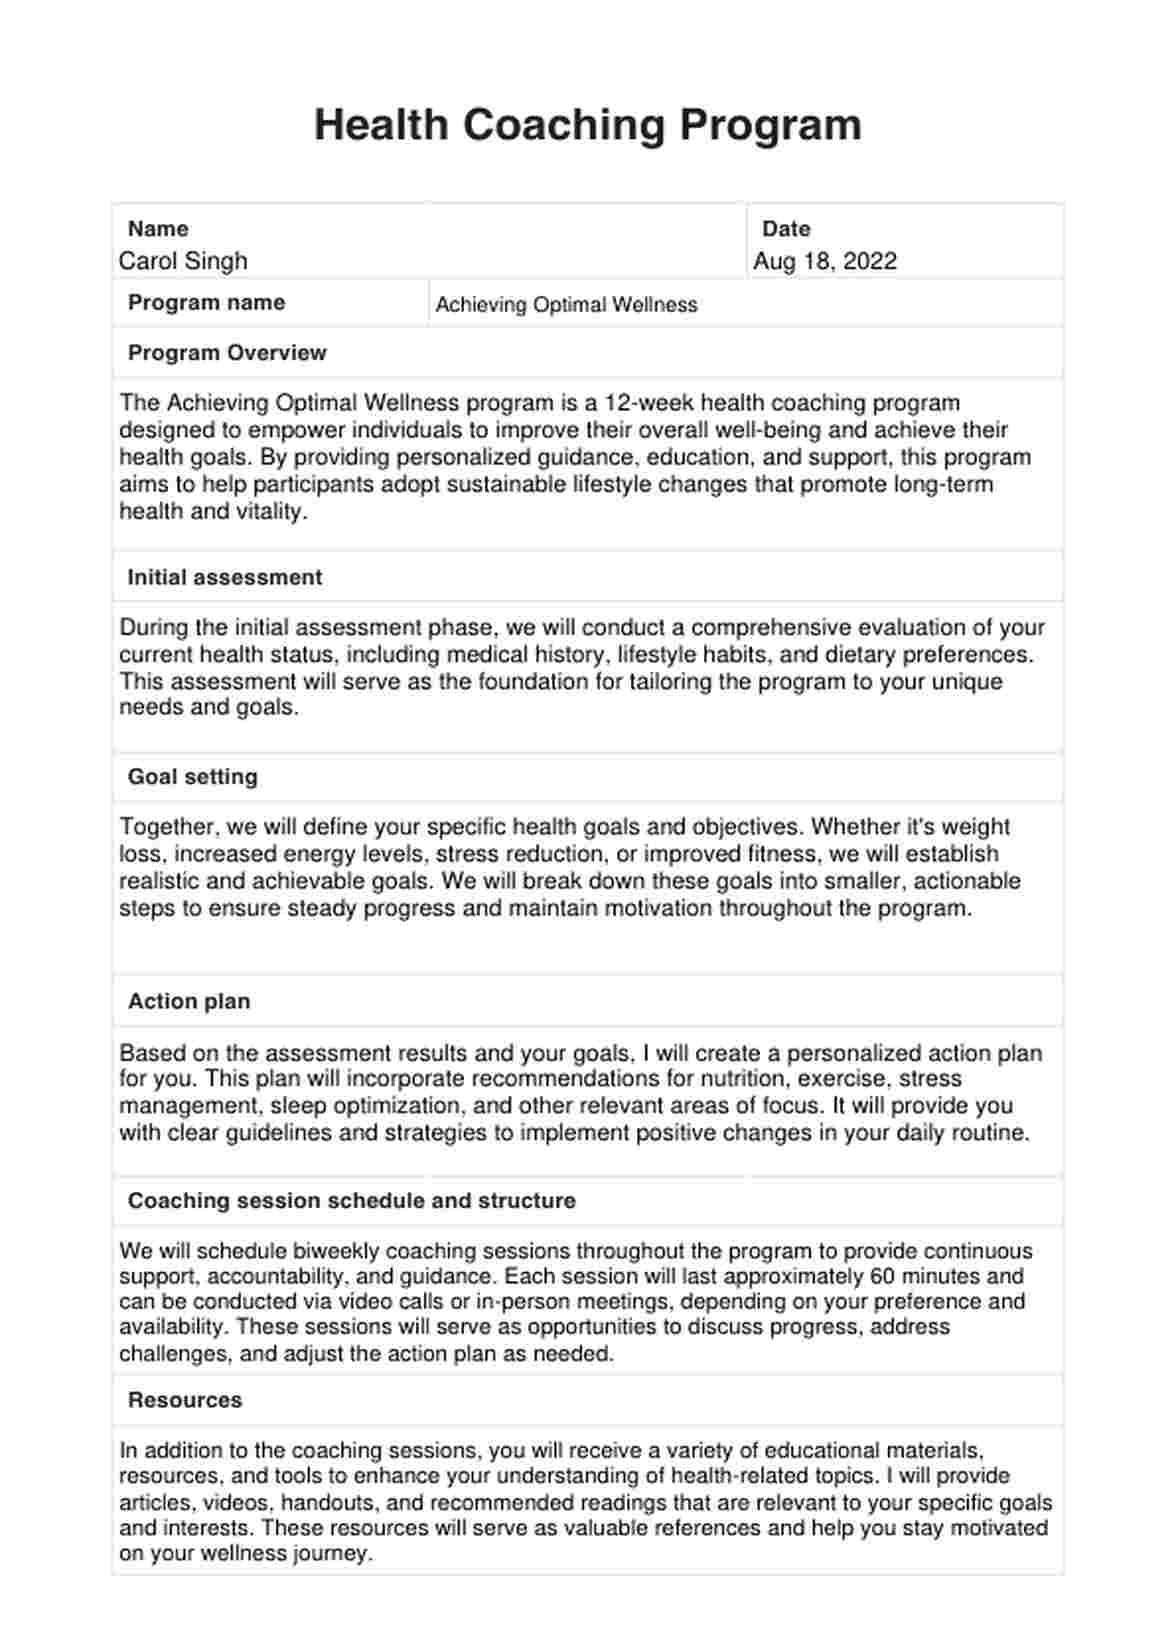 Health Coaching Program Template PDF Example